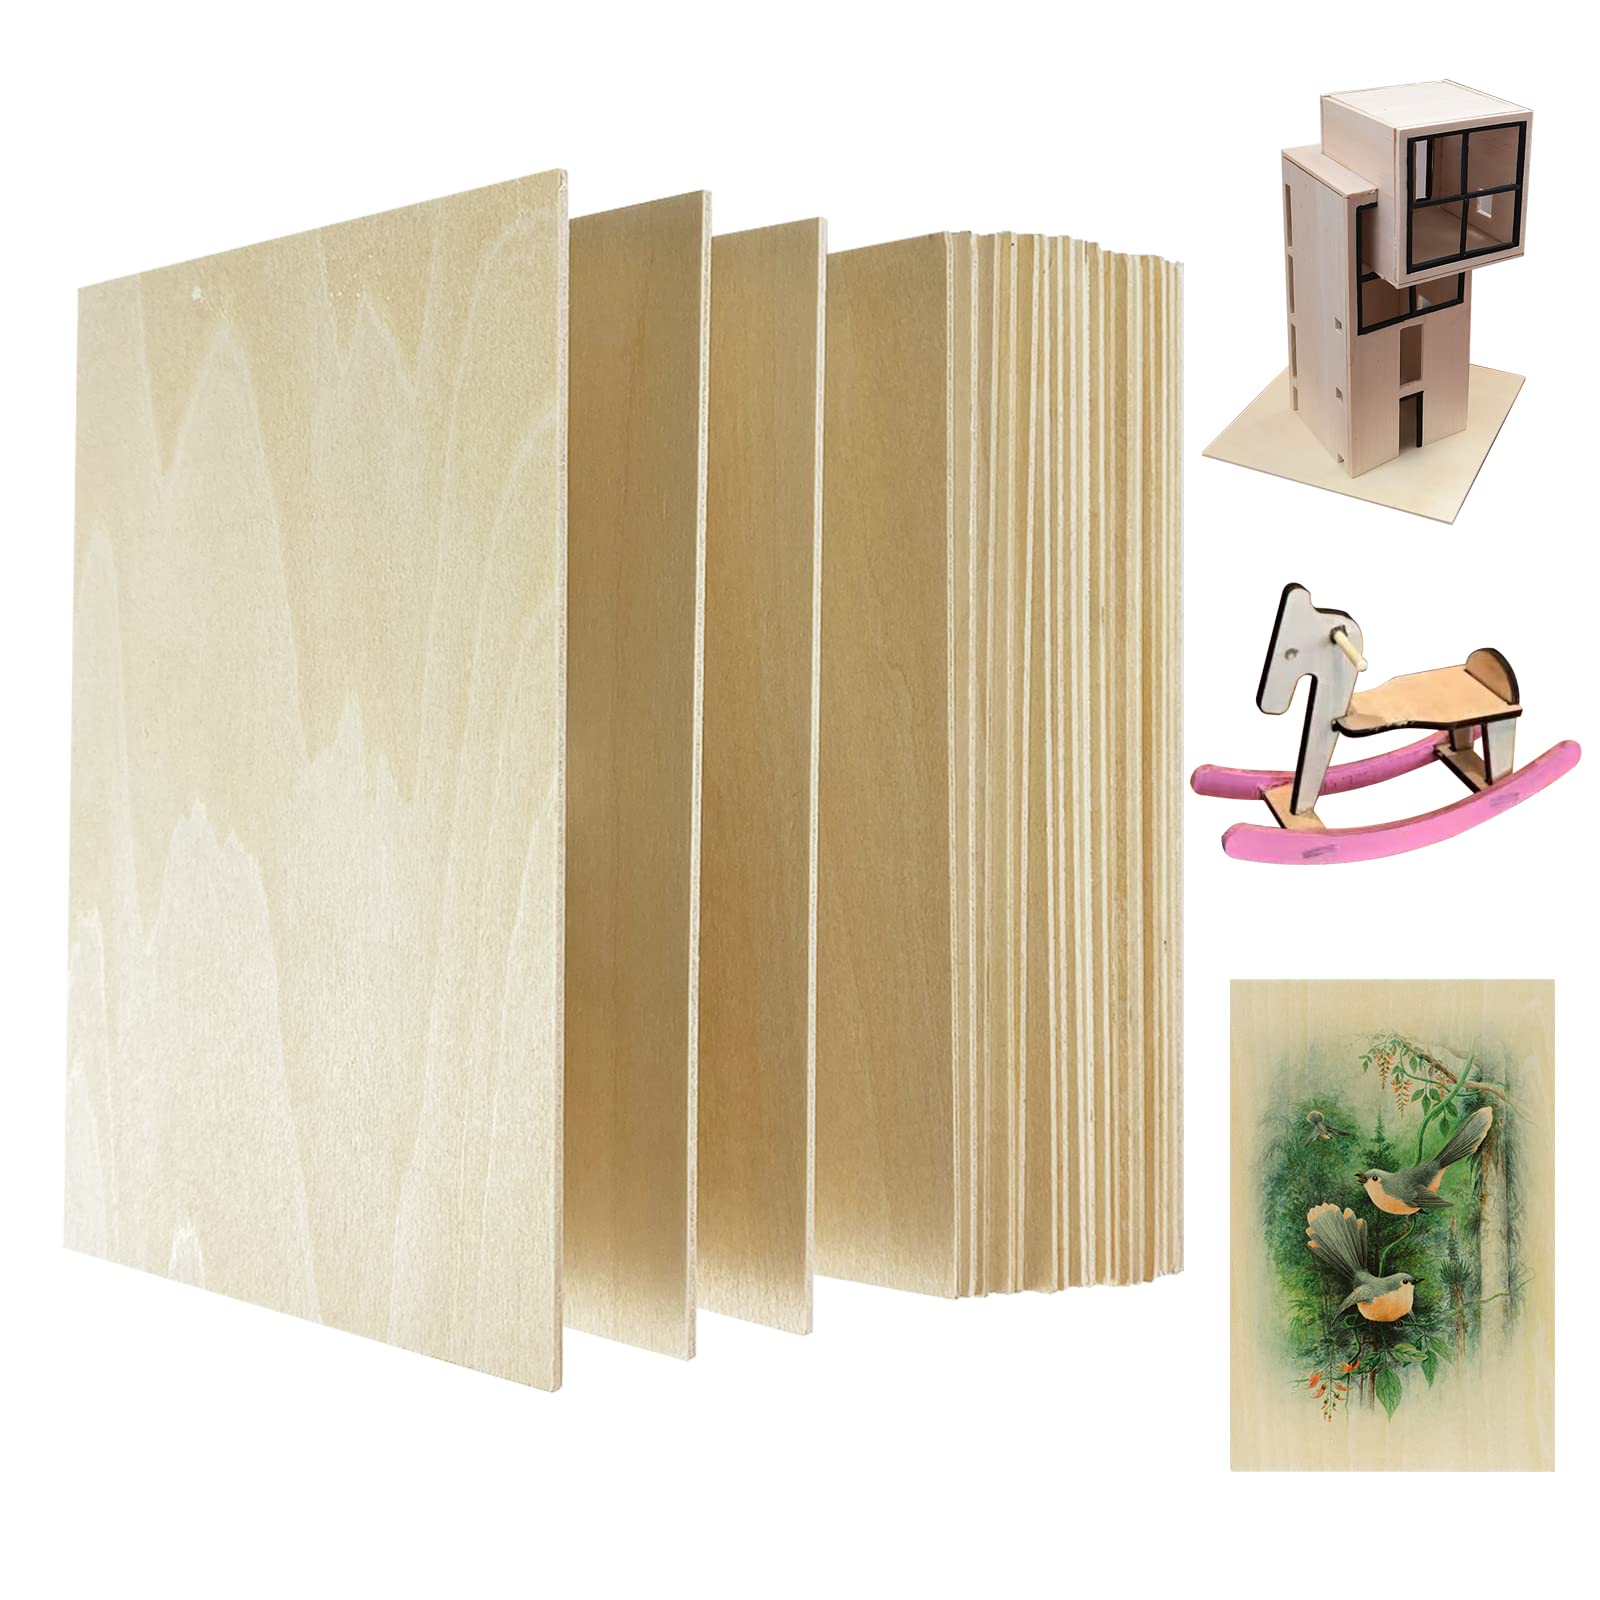 20 Pieces Balsa Wood Sheets Wood Plywood Hobby Wood Board For Diy